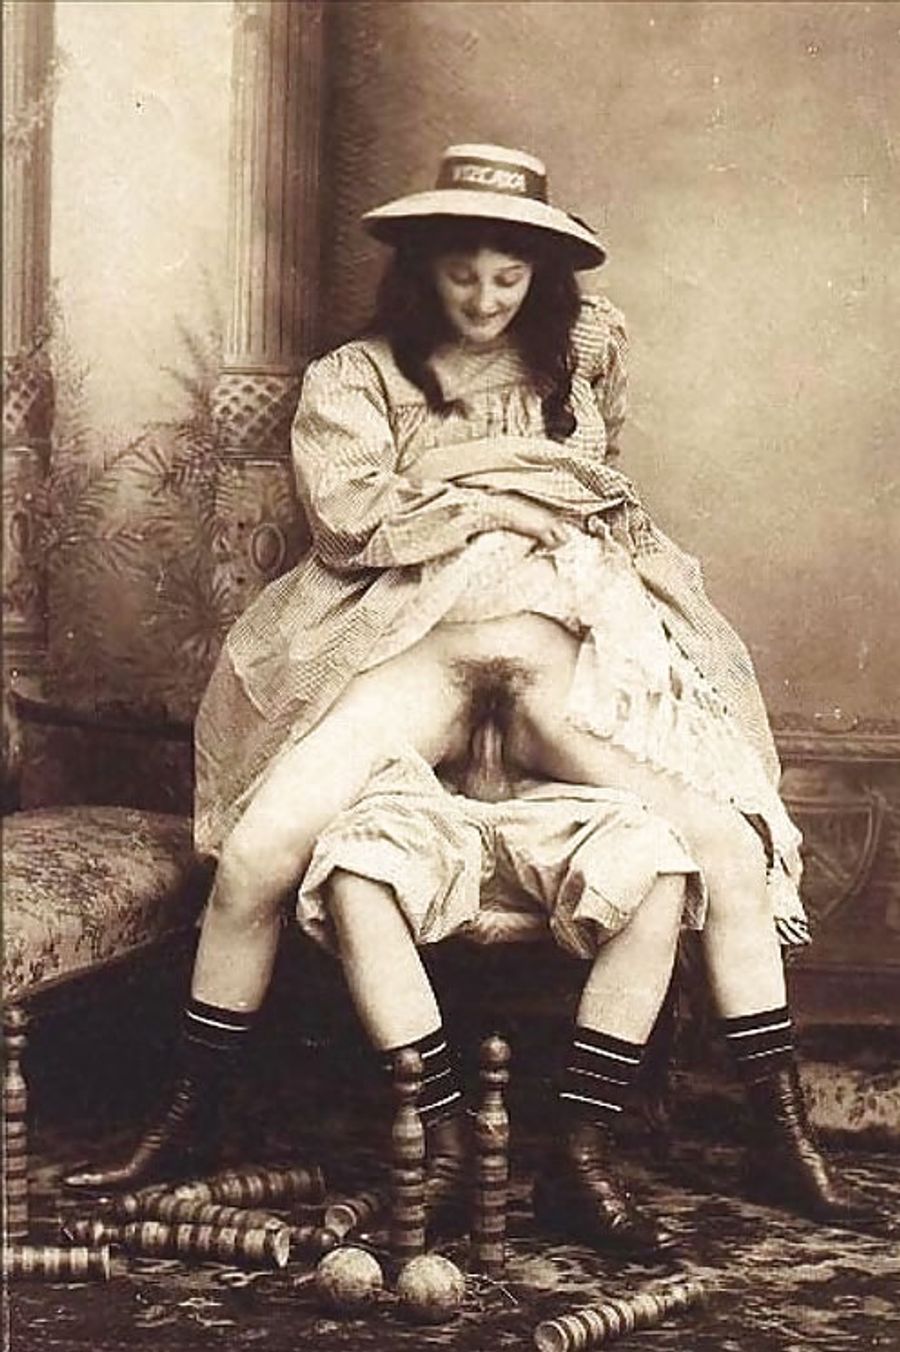 1930s Vintage Porn Sex